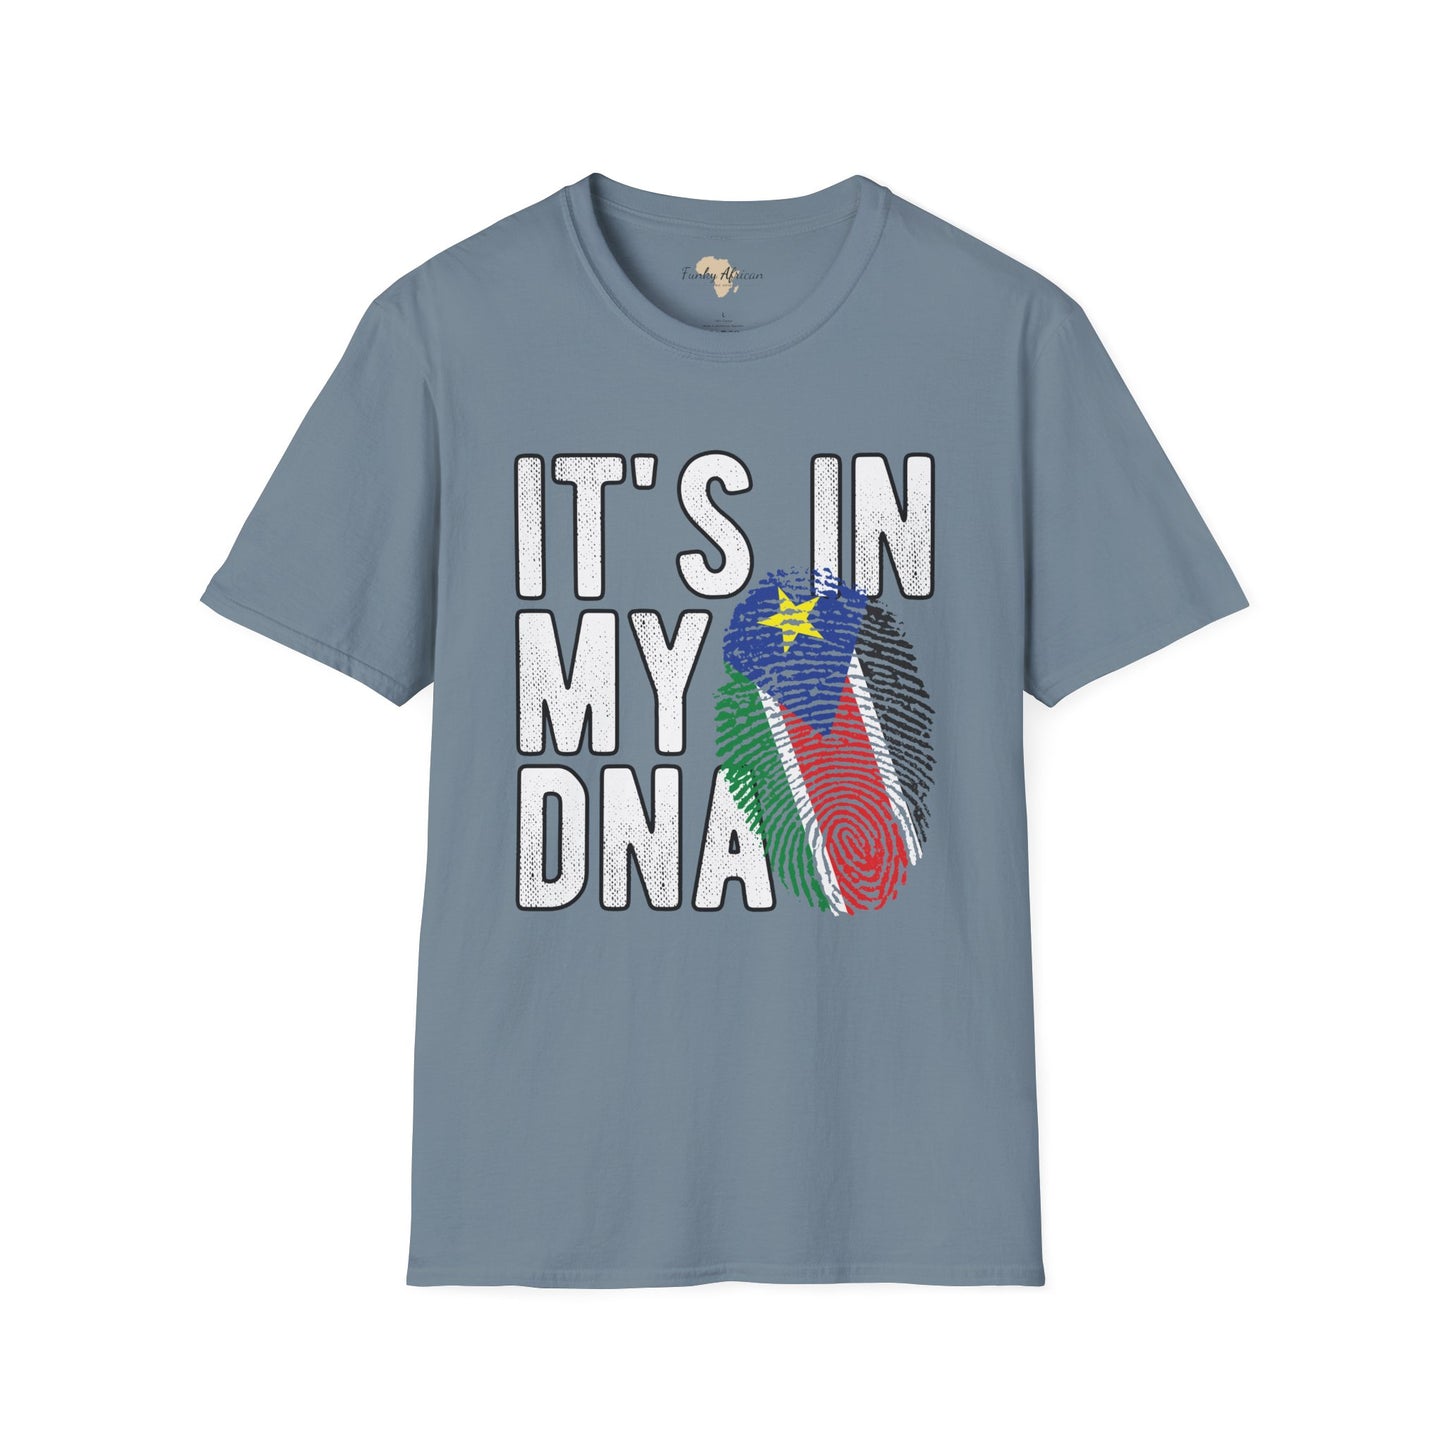 it's in my DNA unisex tee - South Sudan